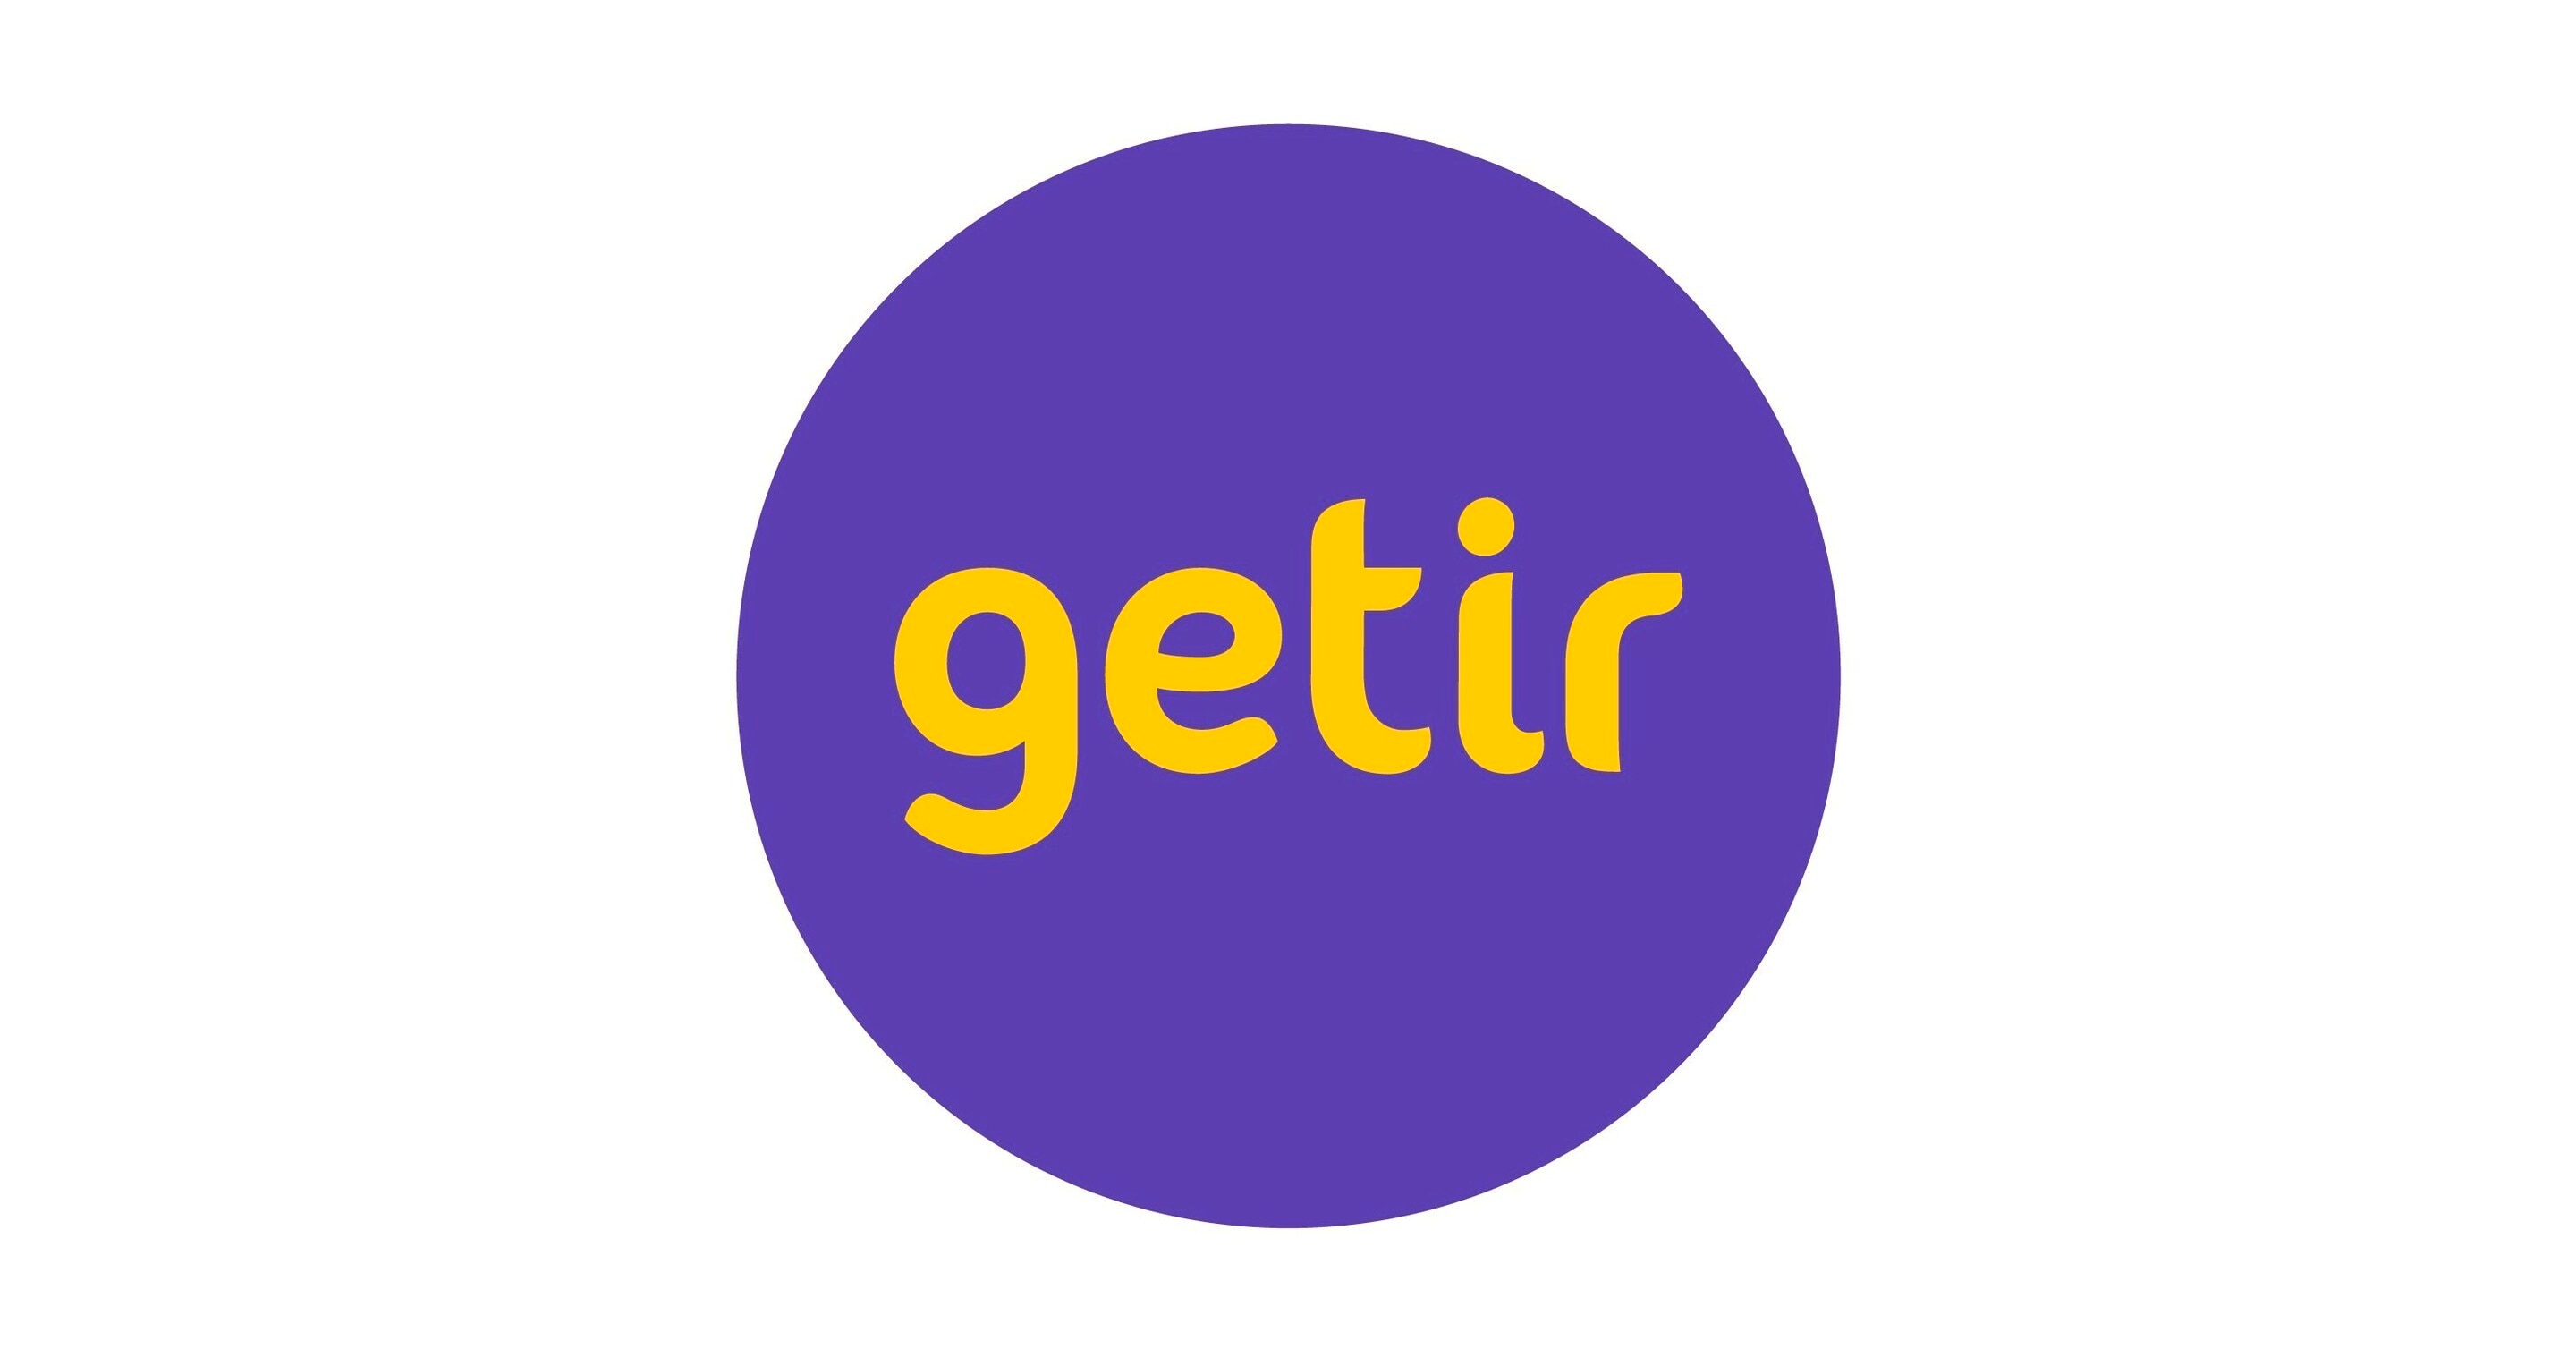 Getir logo - links opens in a new tab